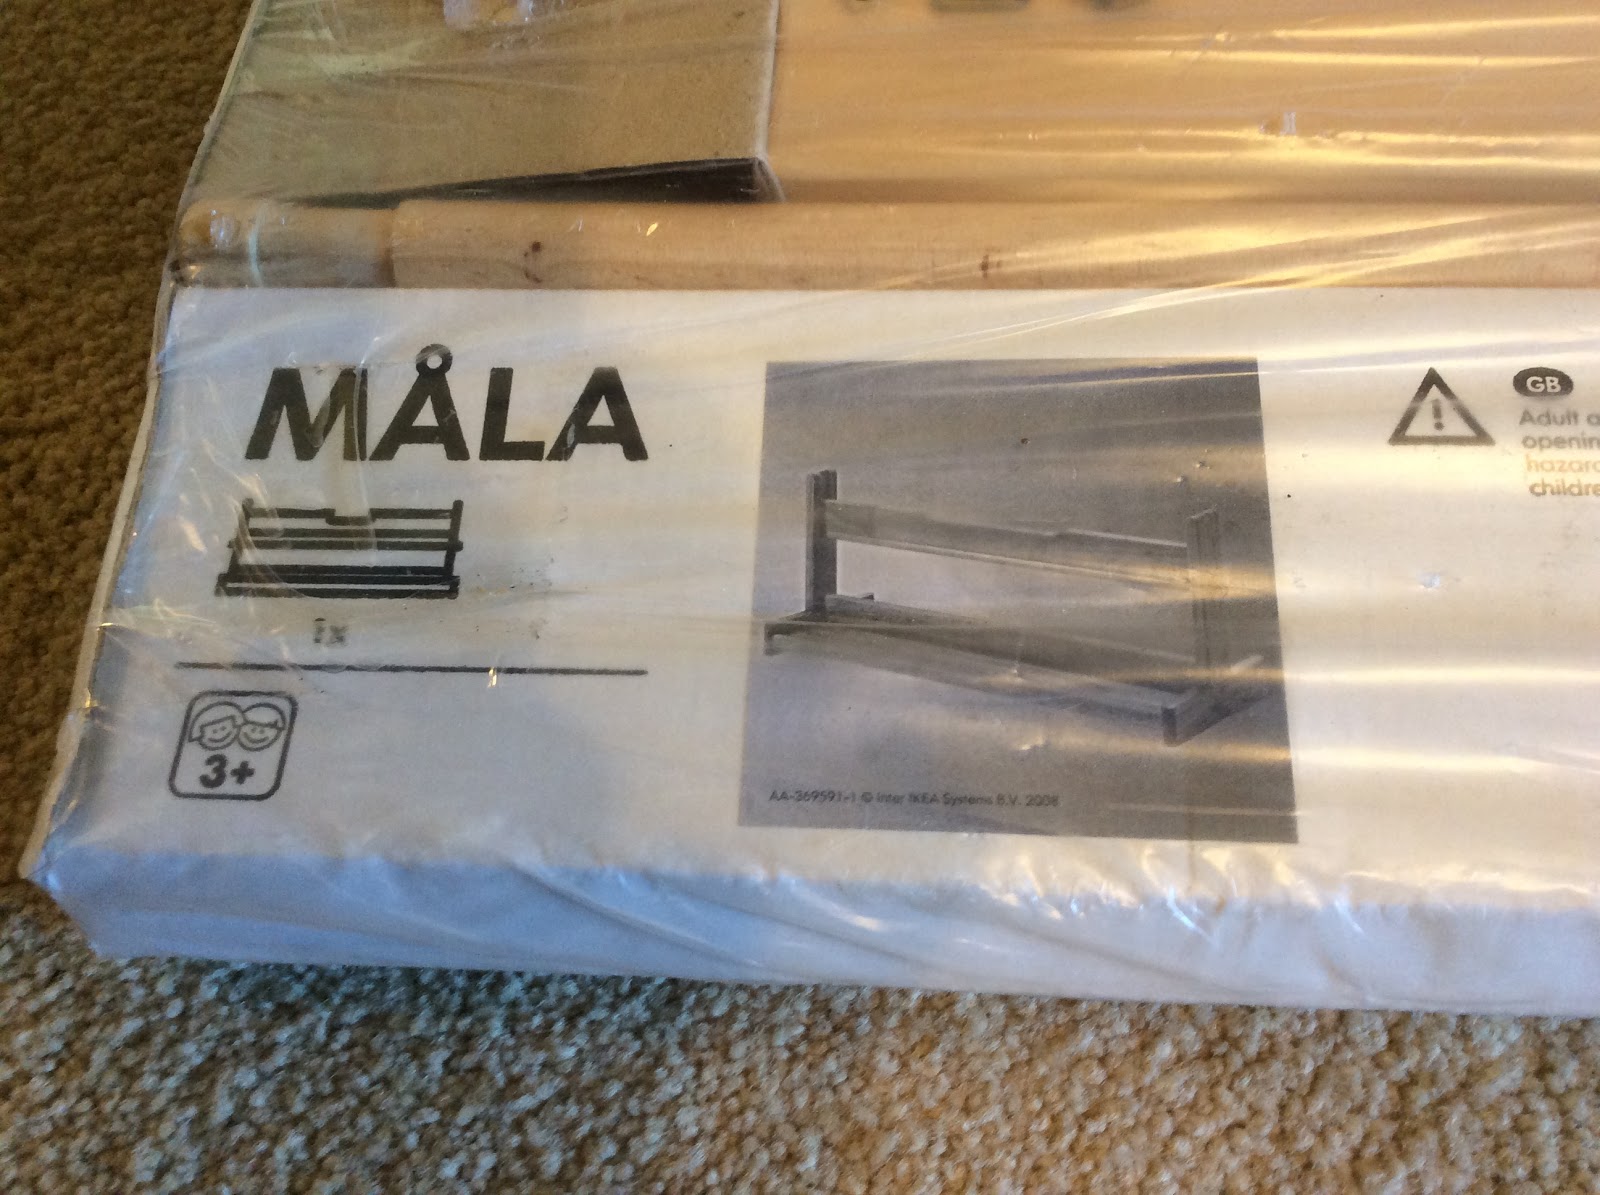 DIY Butcher Paper Roll Holder IKEA Hack » Megan Leigh Acosta